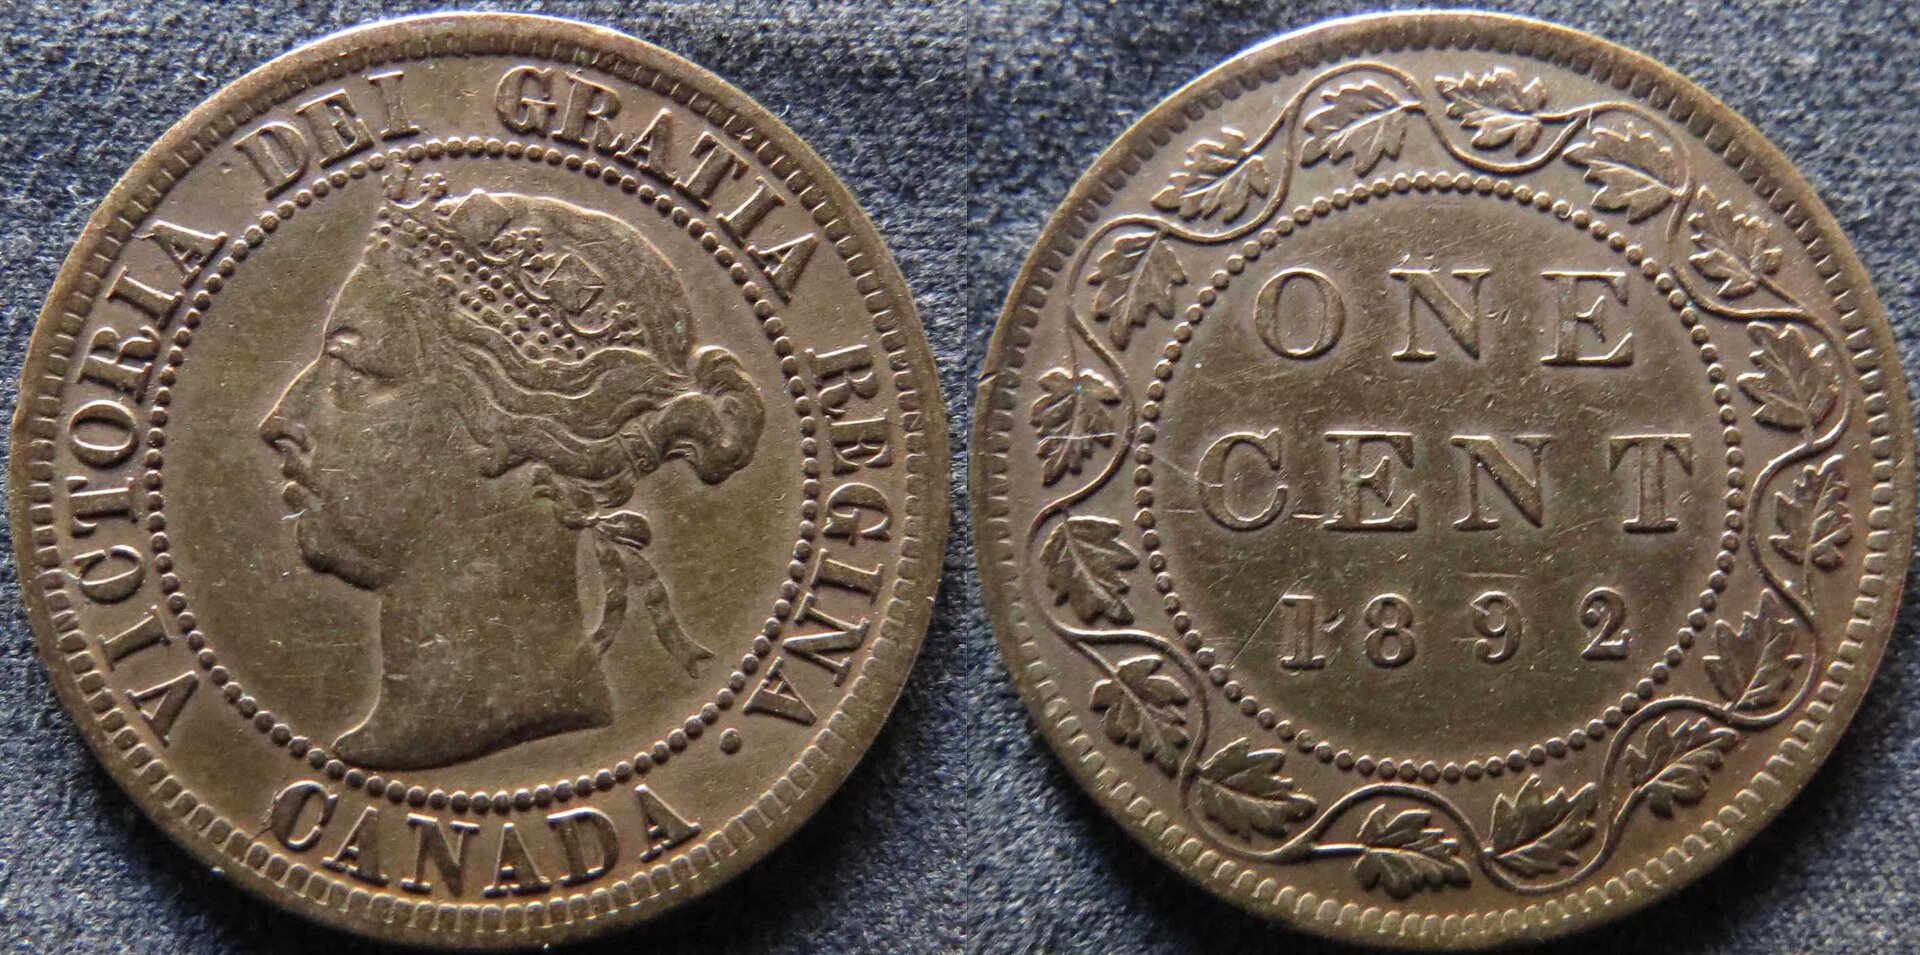 Canada 1 cent 1892 copy.jpg